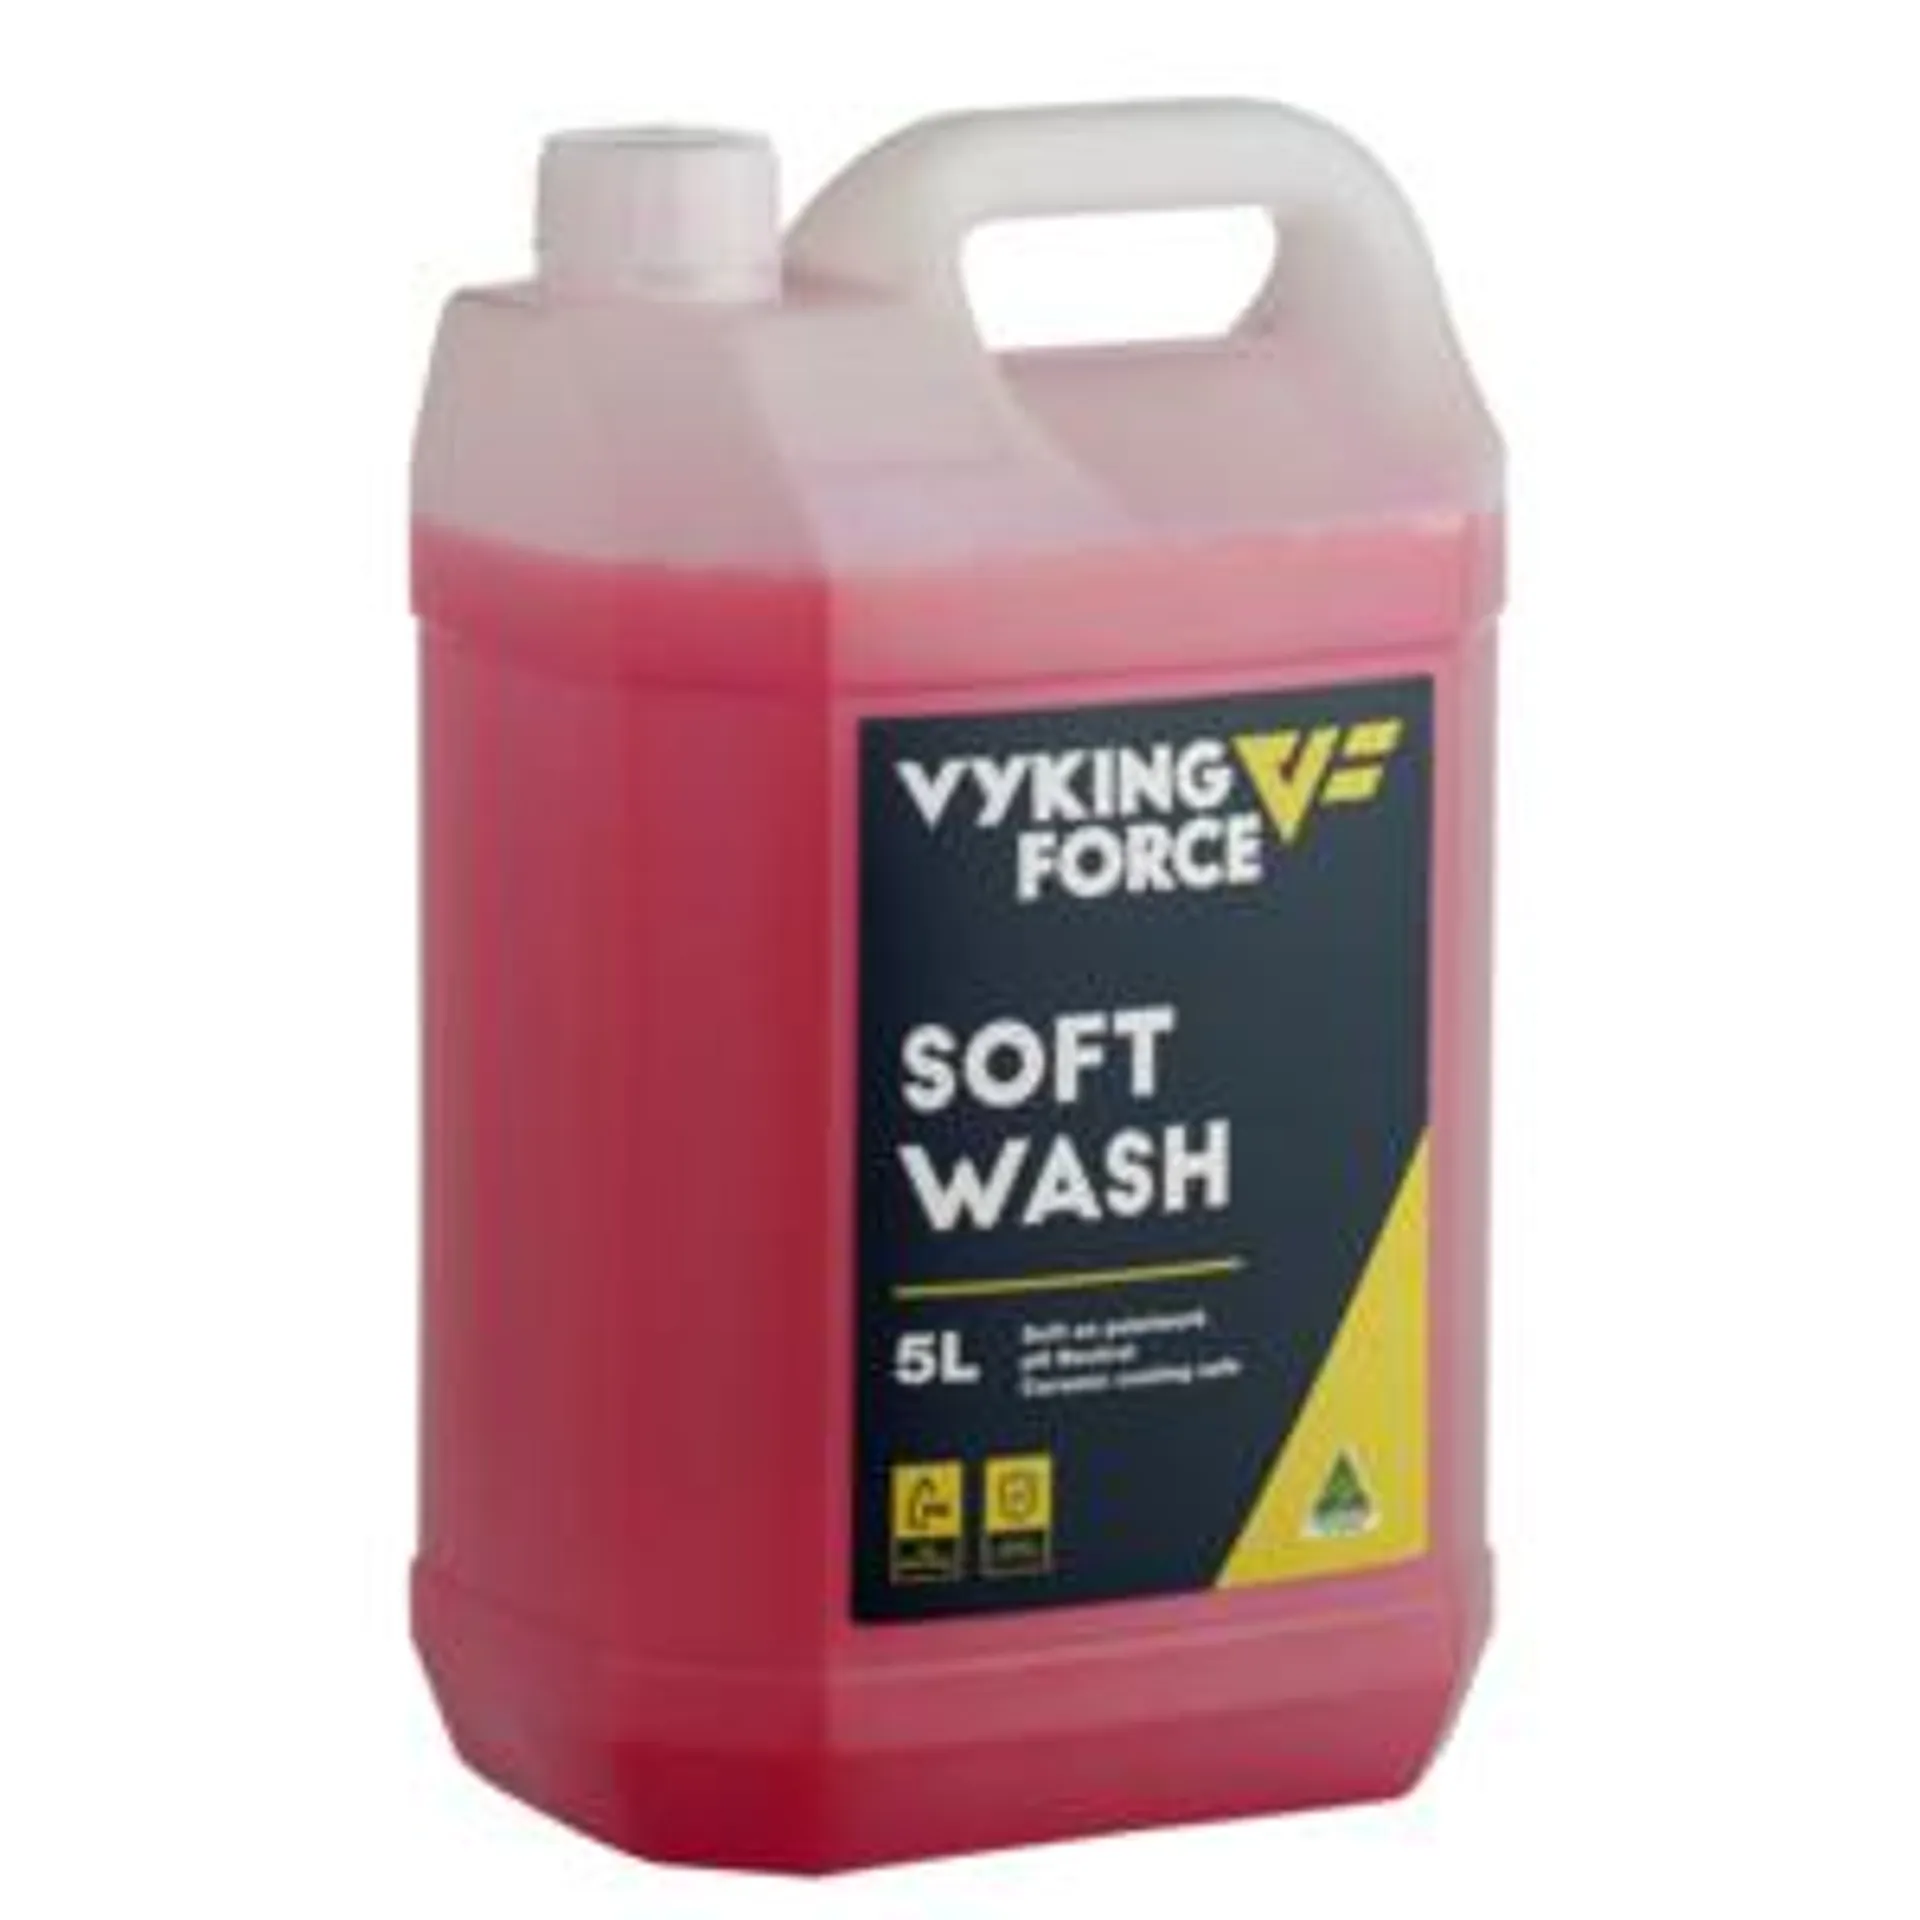 Vyking Force Soft Wash 5L - VFSW5L